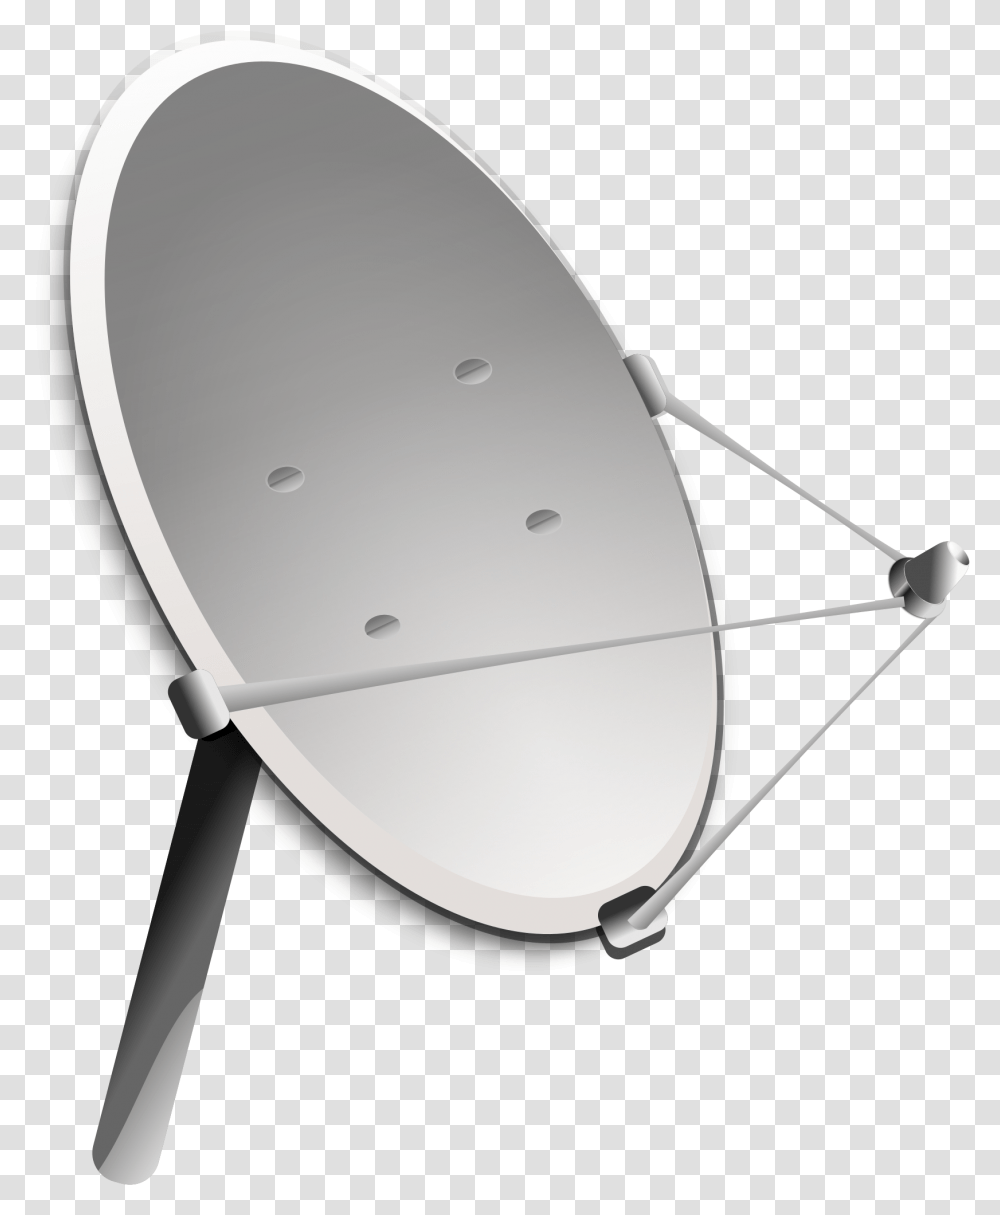 Satellite Background Satellite Dish Background, Antenna, Electrical Device, Radio Telescope Transparent Png